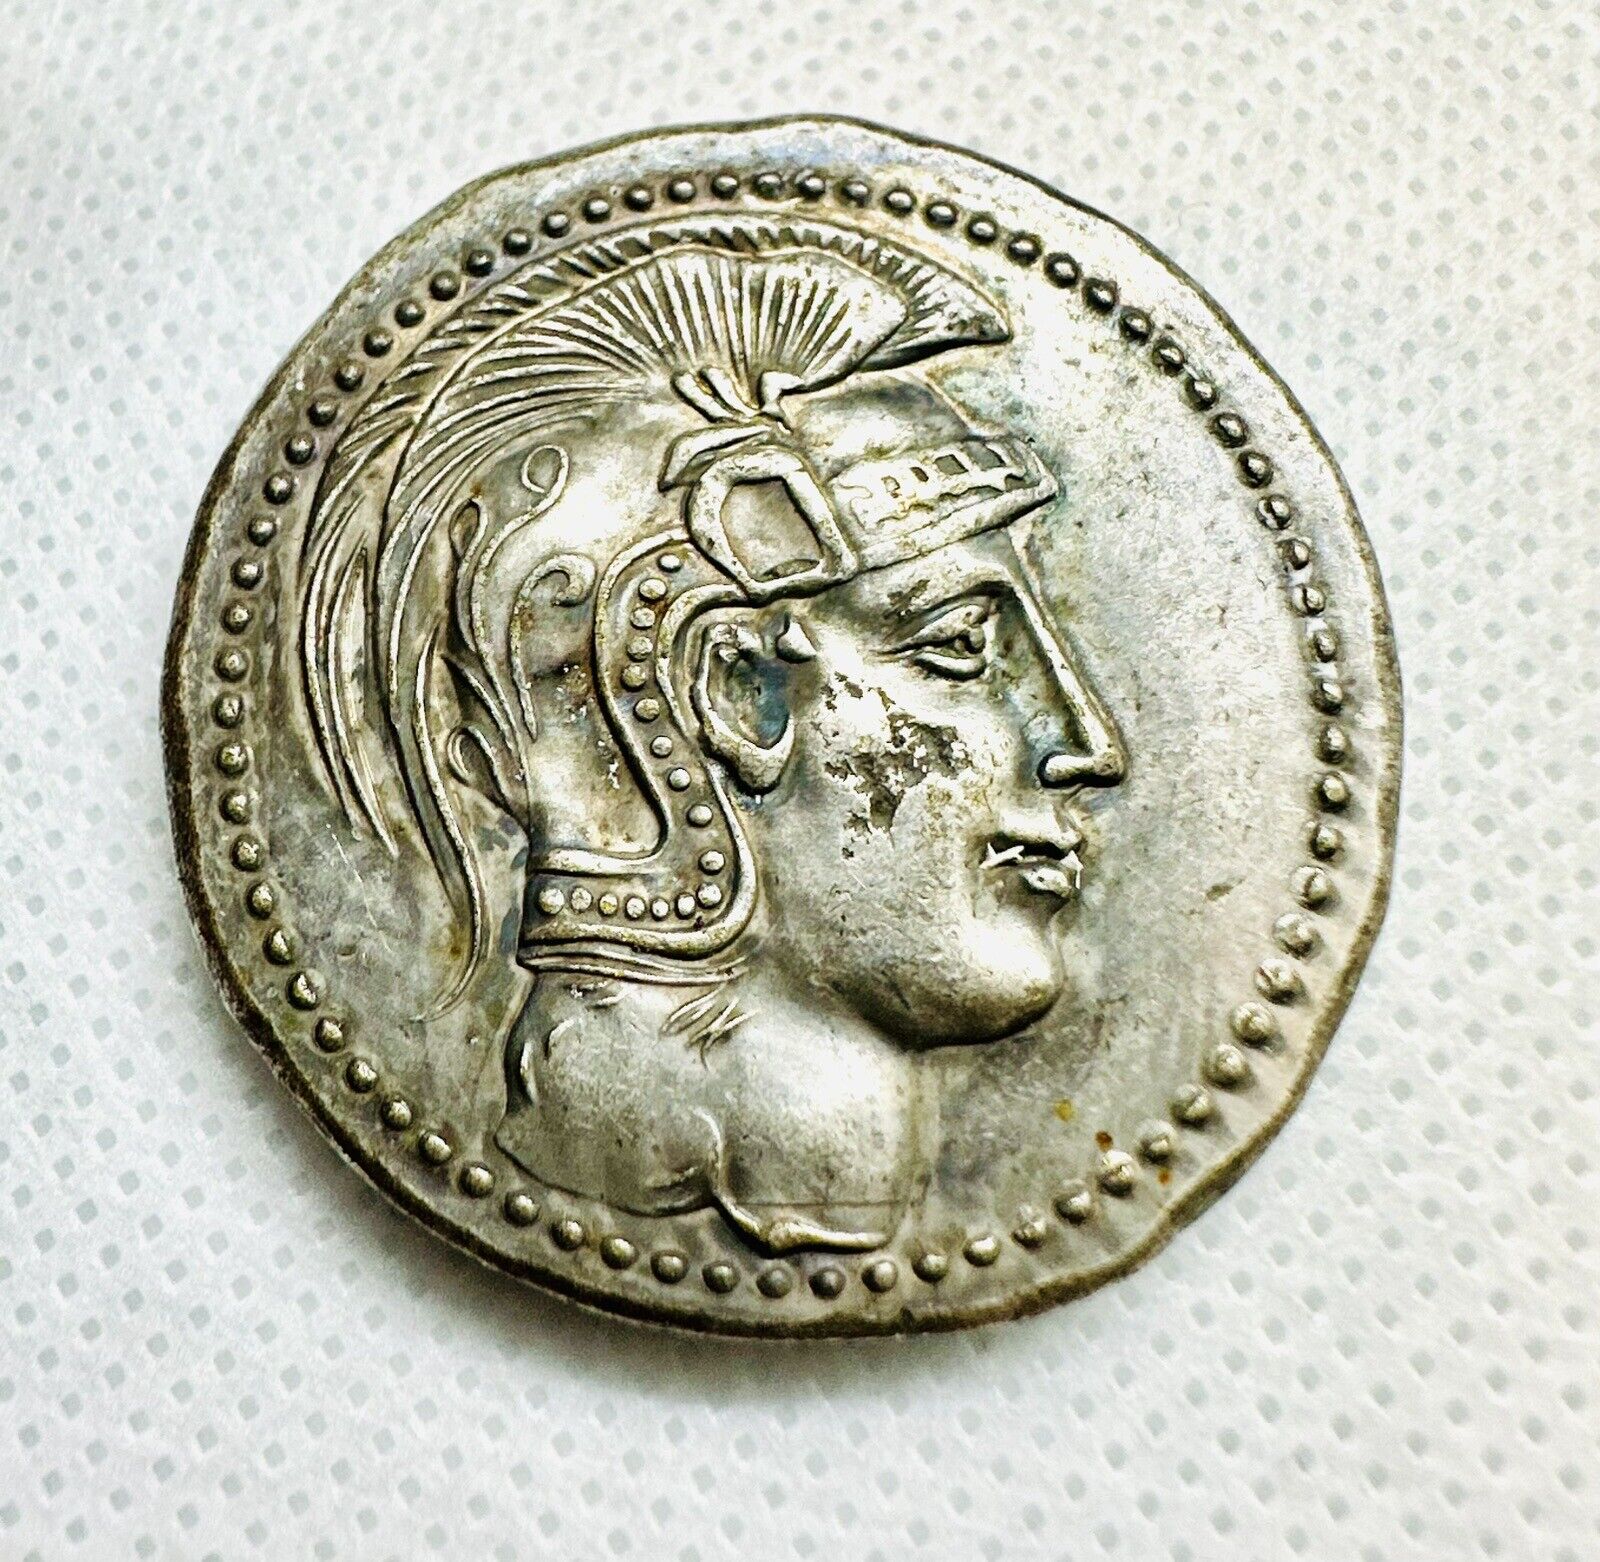 Wonderful Rare Beautiful Ancient Greek Empire Silver coin Unique Big Coin 16 gm